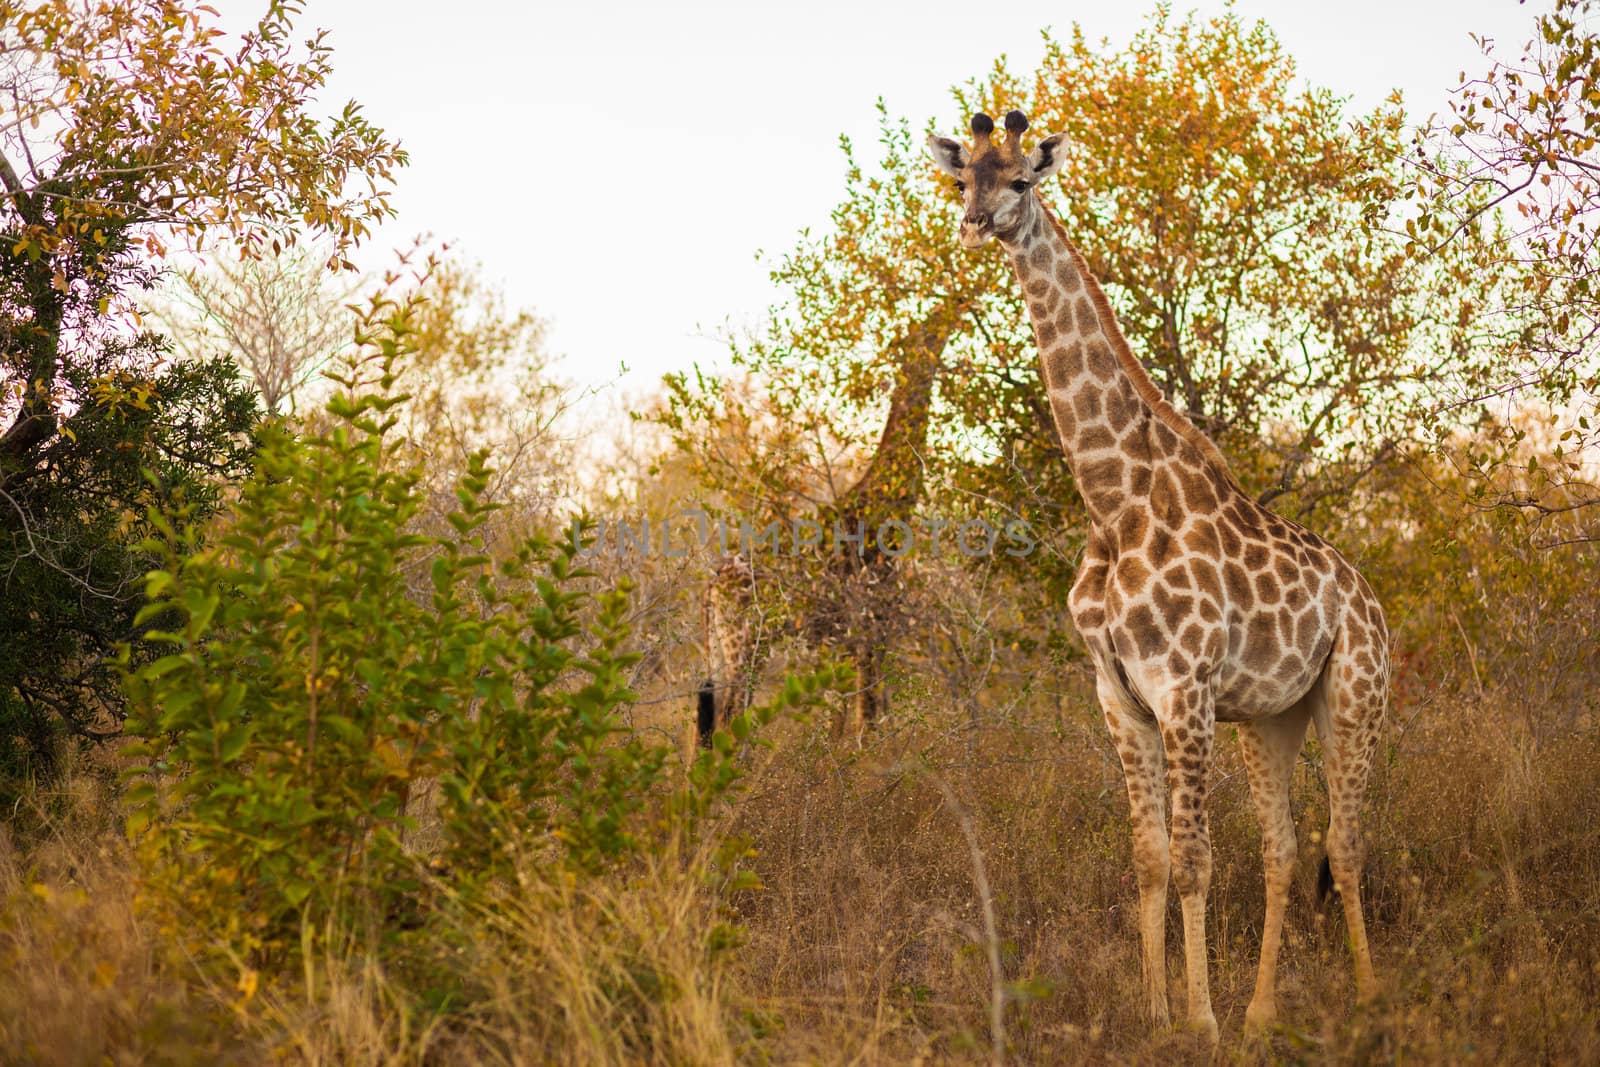 Giraffe (Giraffa camelopardalis) by edan